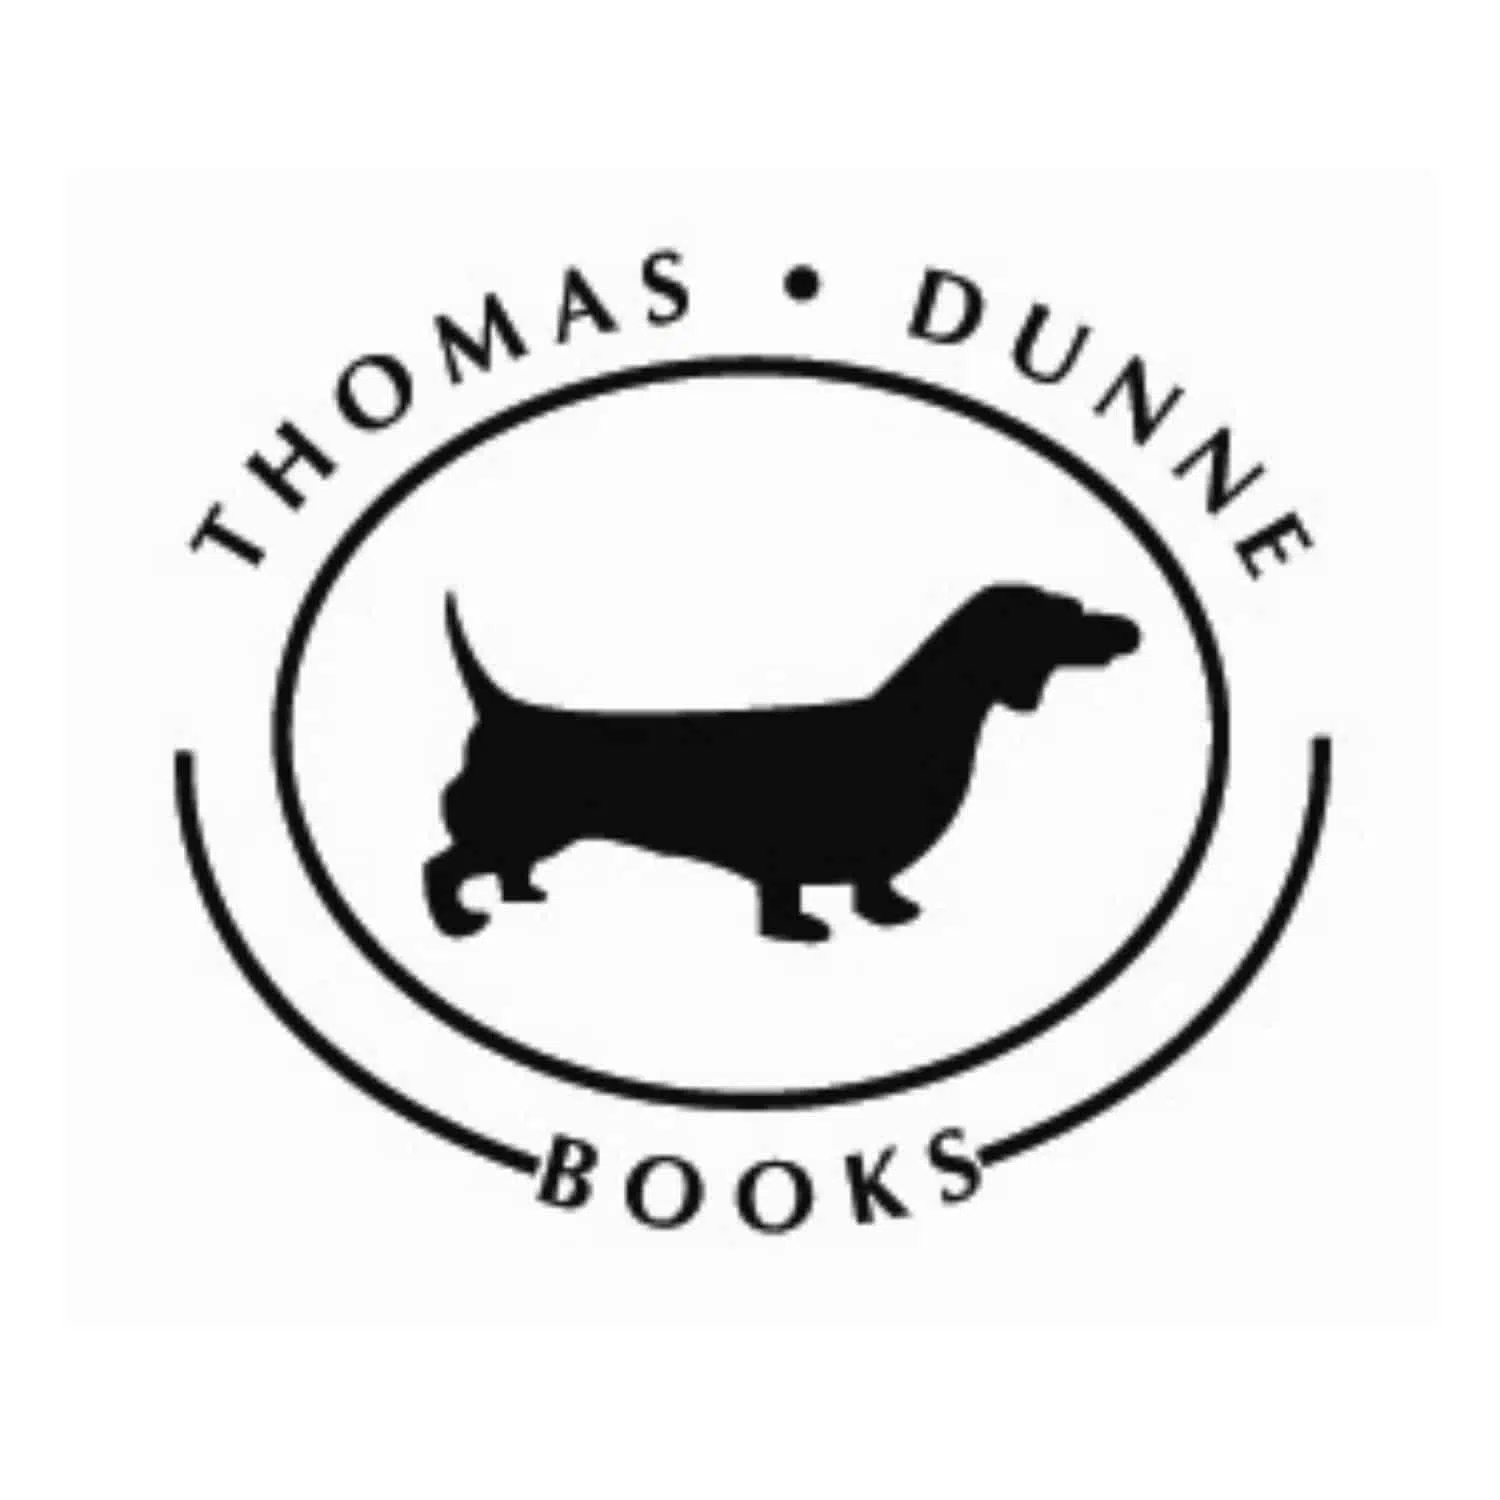 Thomas Dunne Books